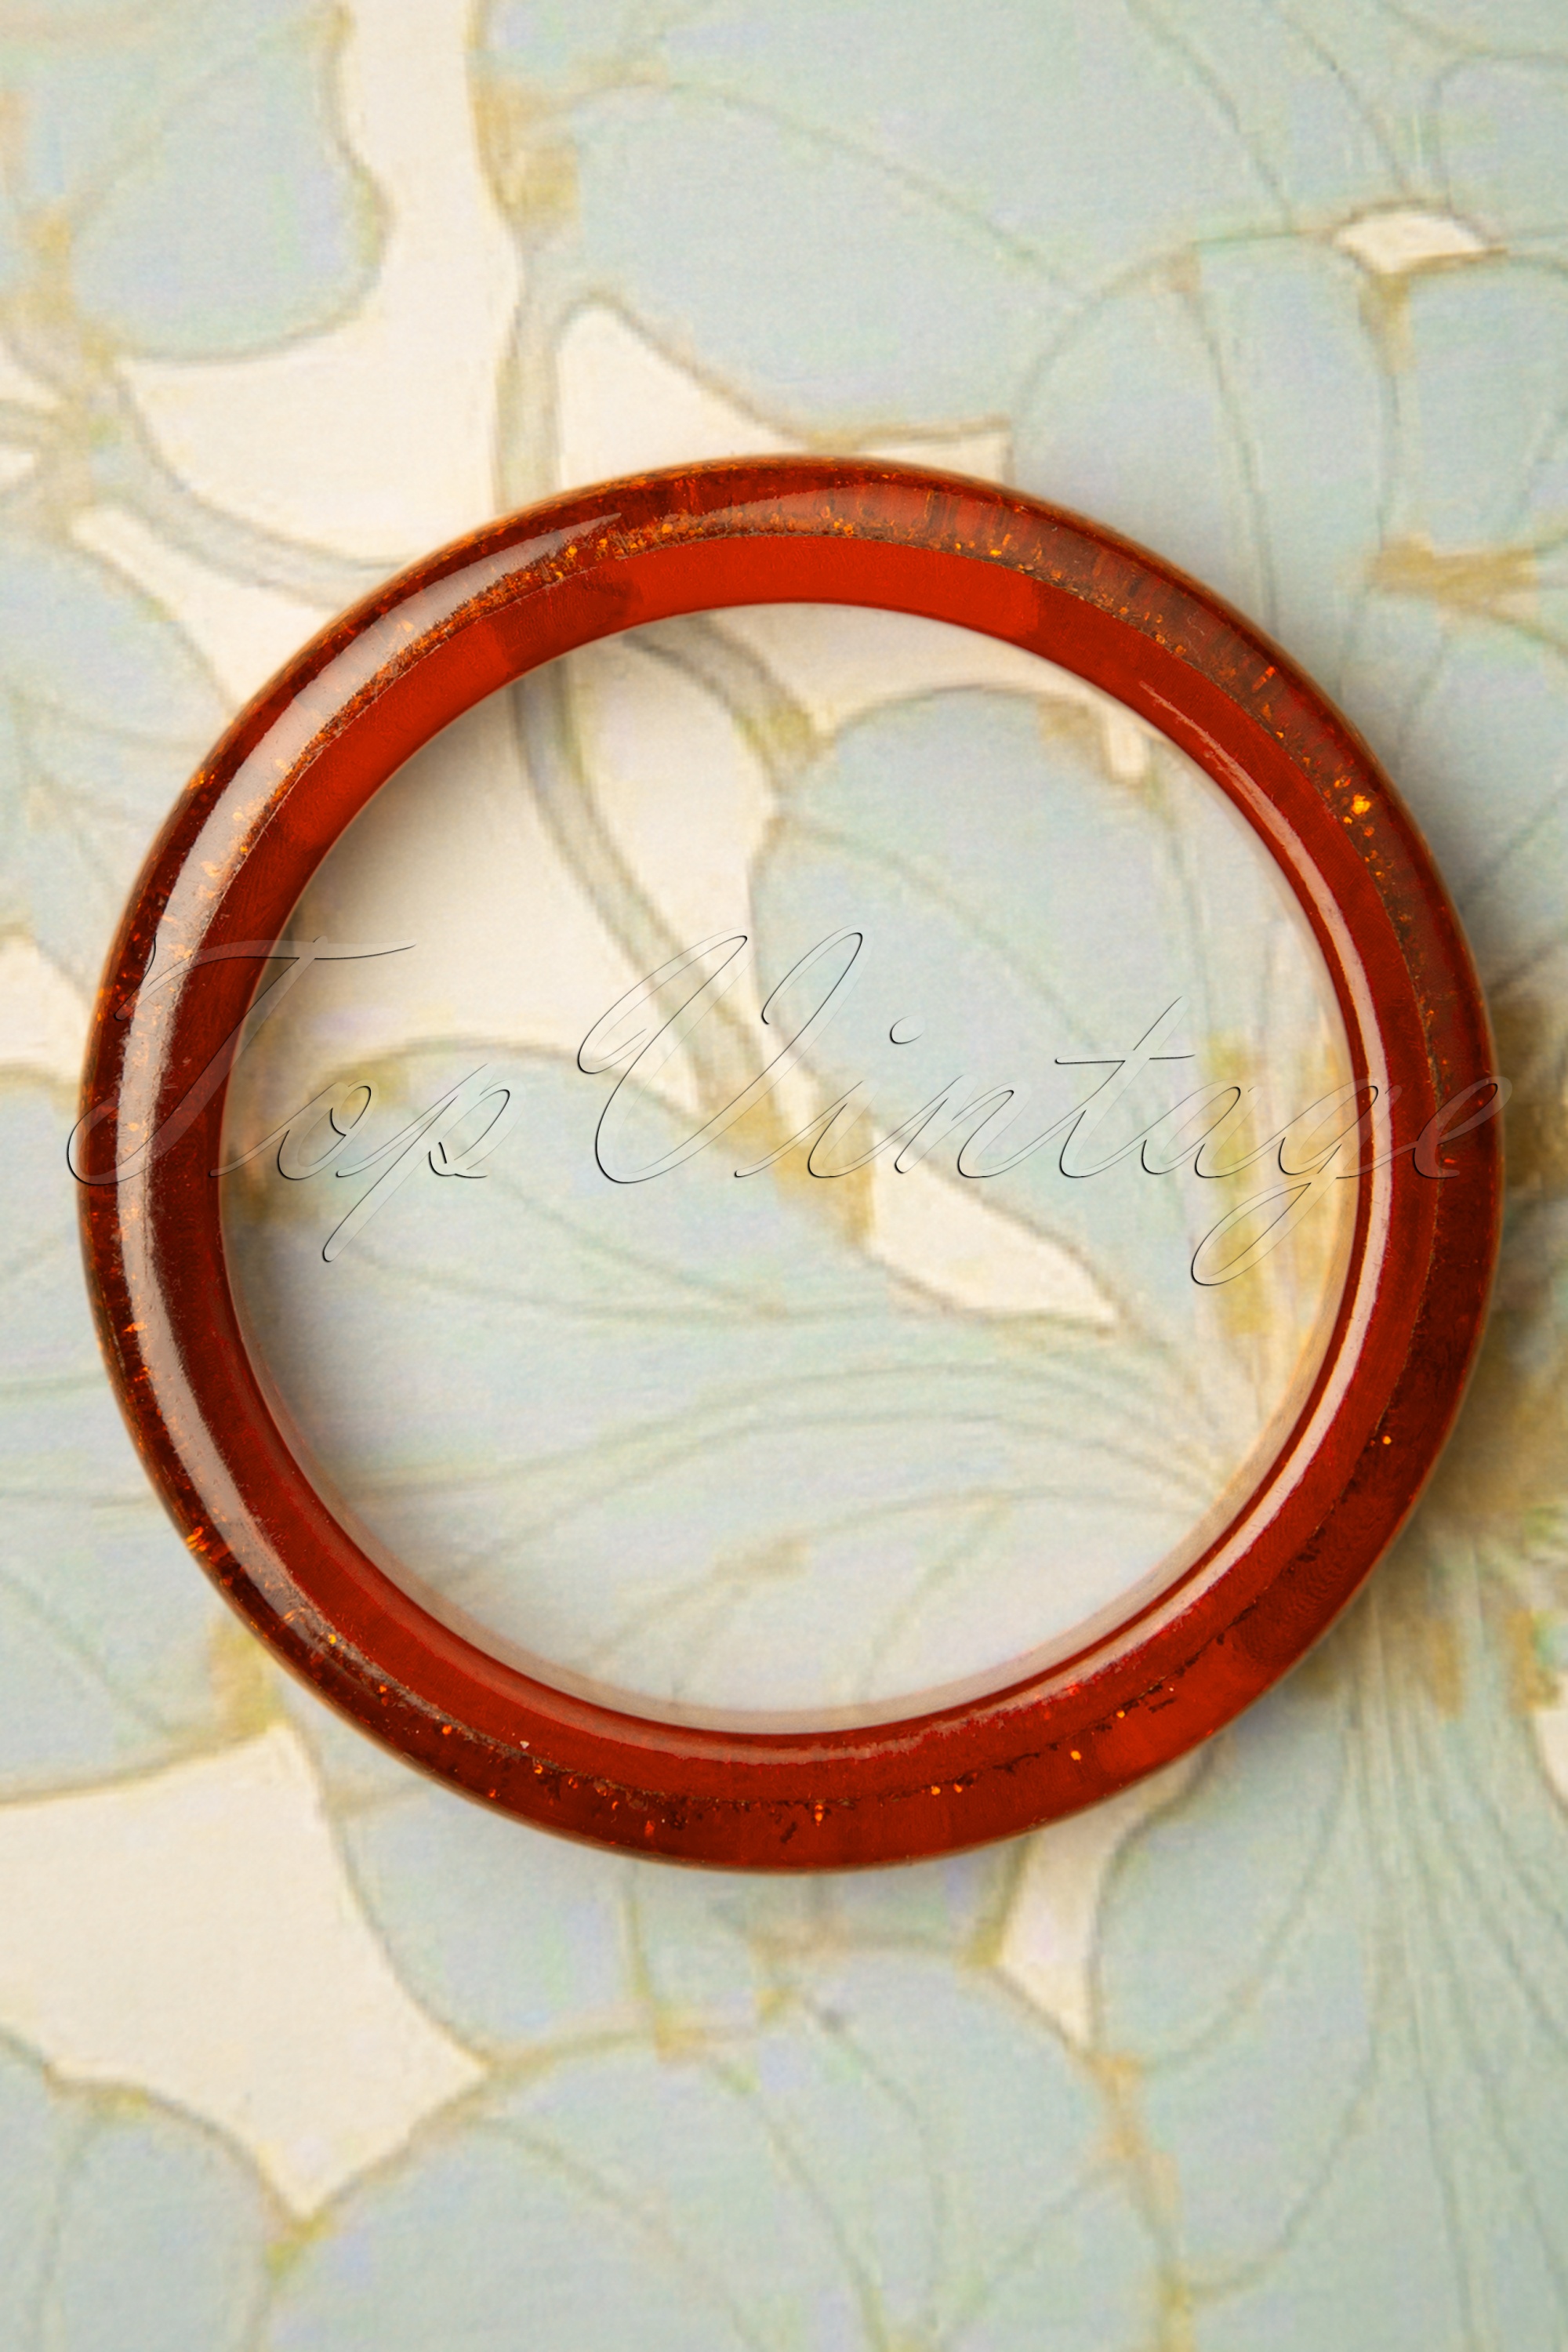 Splendette - Exclusief bij Topvintage ~ Fedora Midi glitter armband in amber rood 2